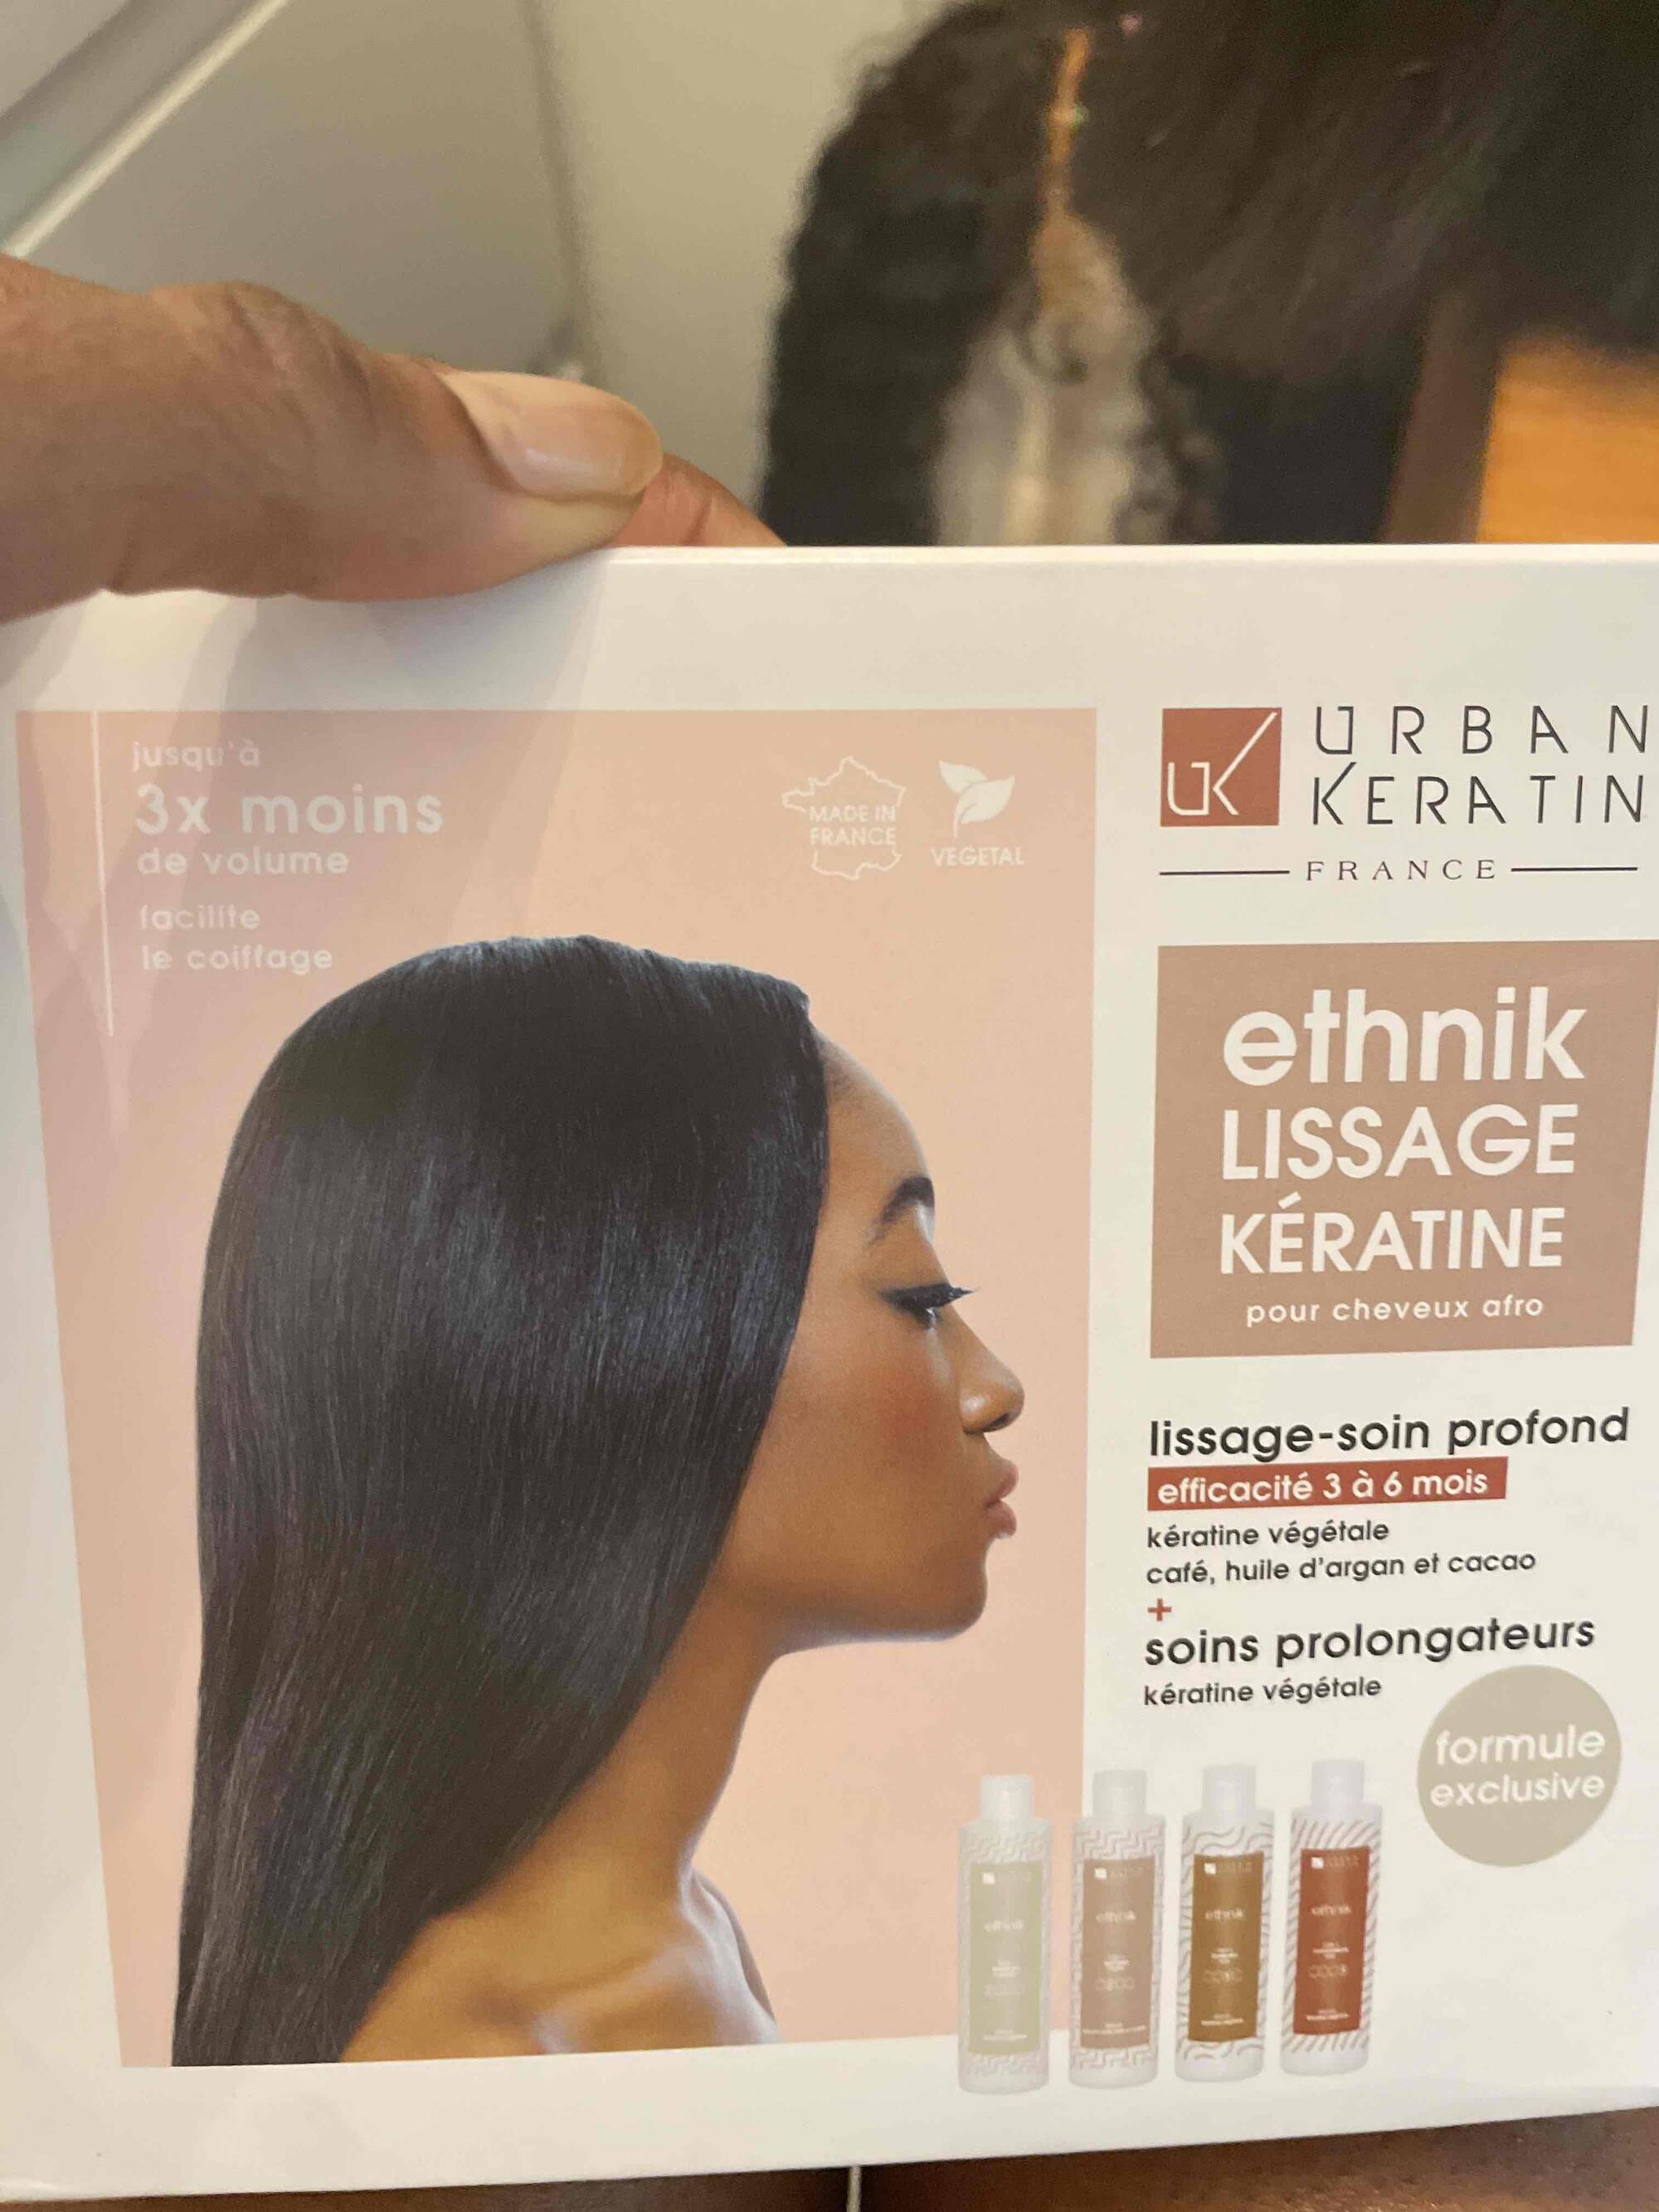 URBAN KERATIN - Ethnik - Lissage kératine pour cheveux afro